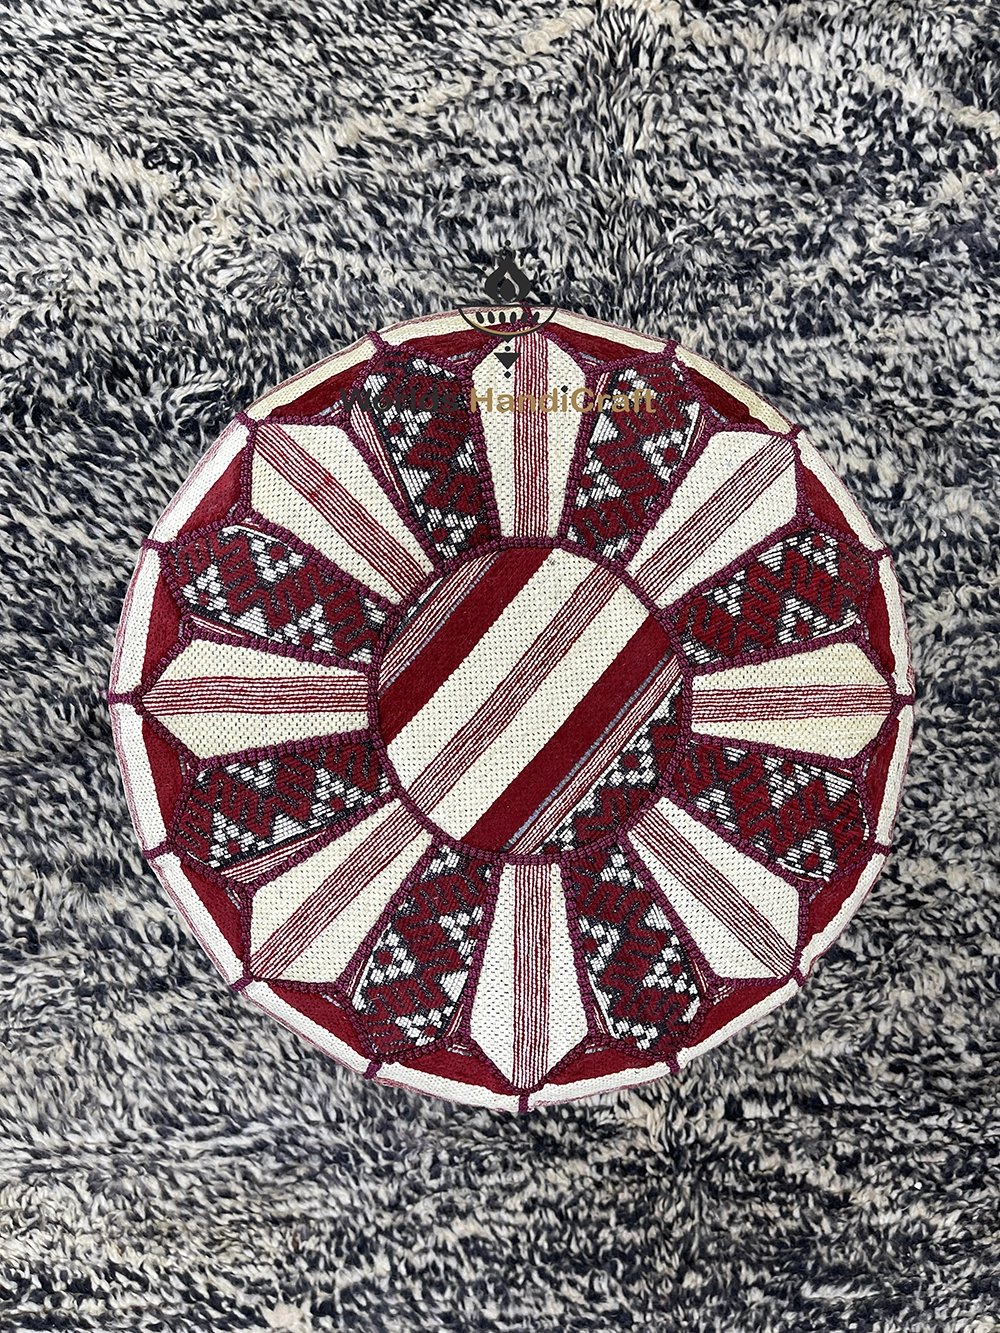 Moroccan Red Multi-Color Tissu Leather Floor Pouf Ottoman